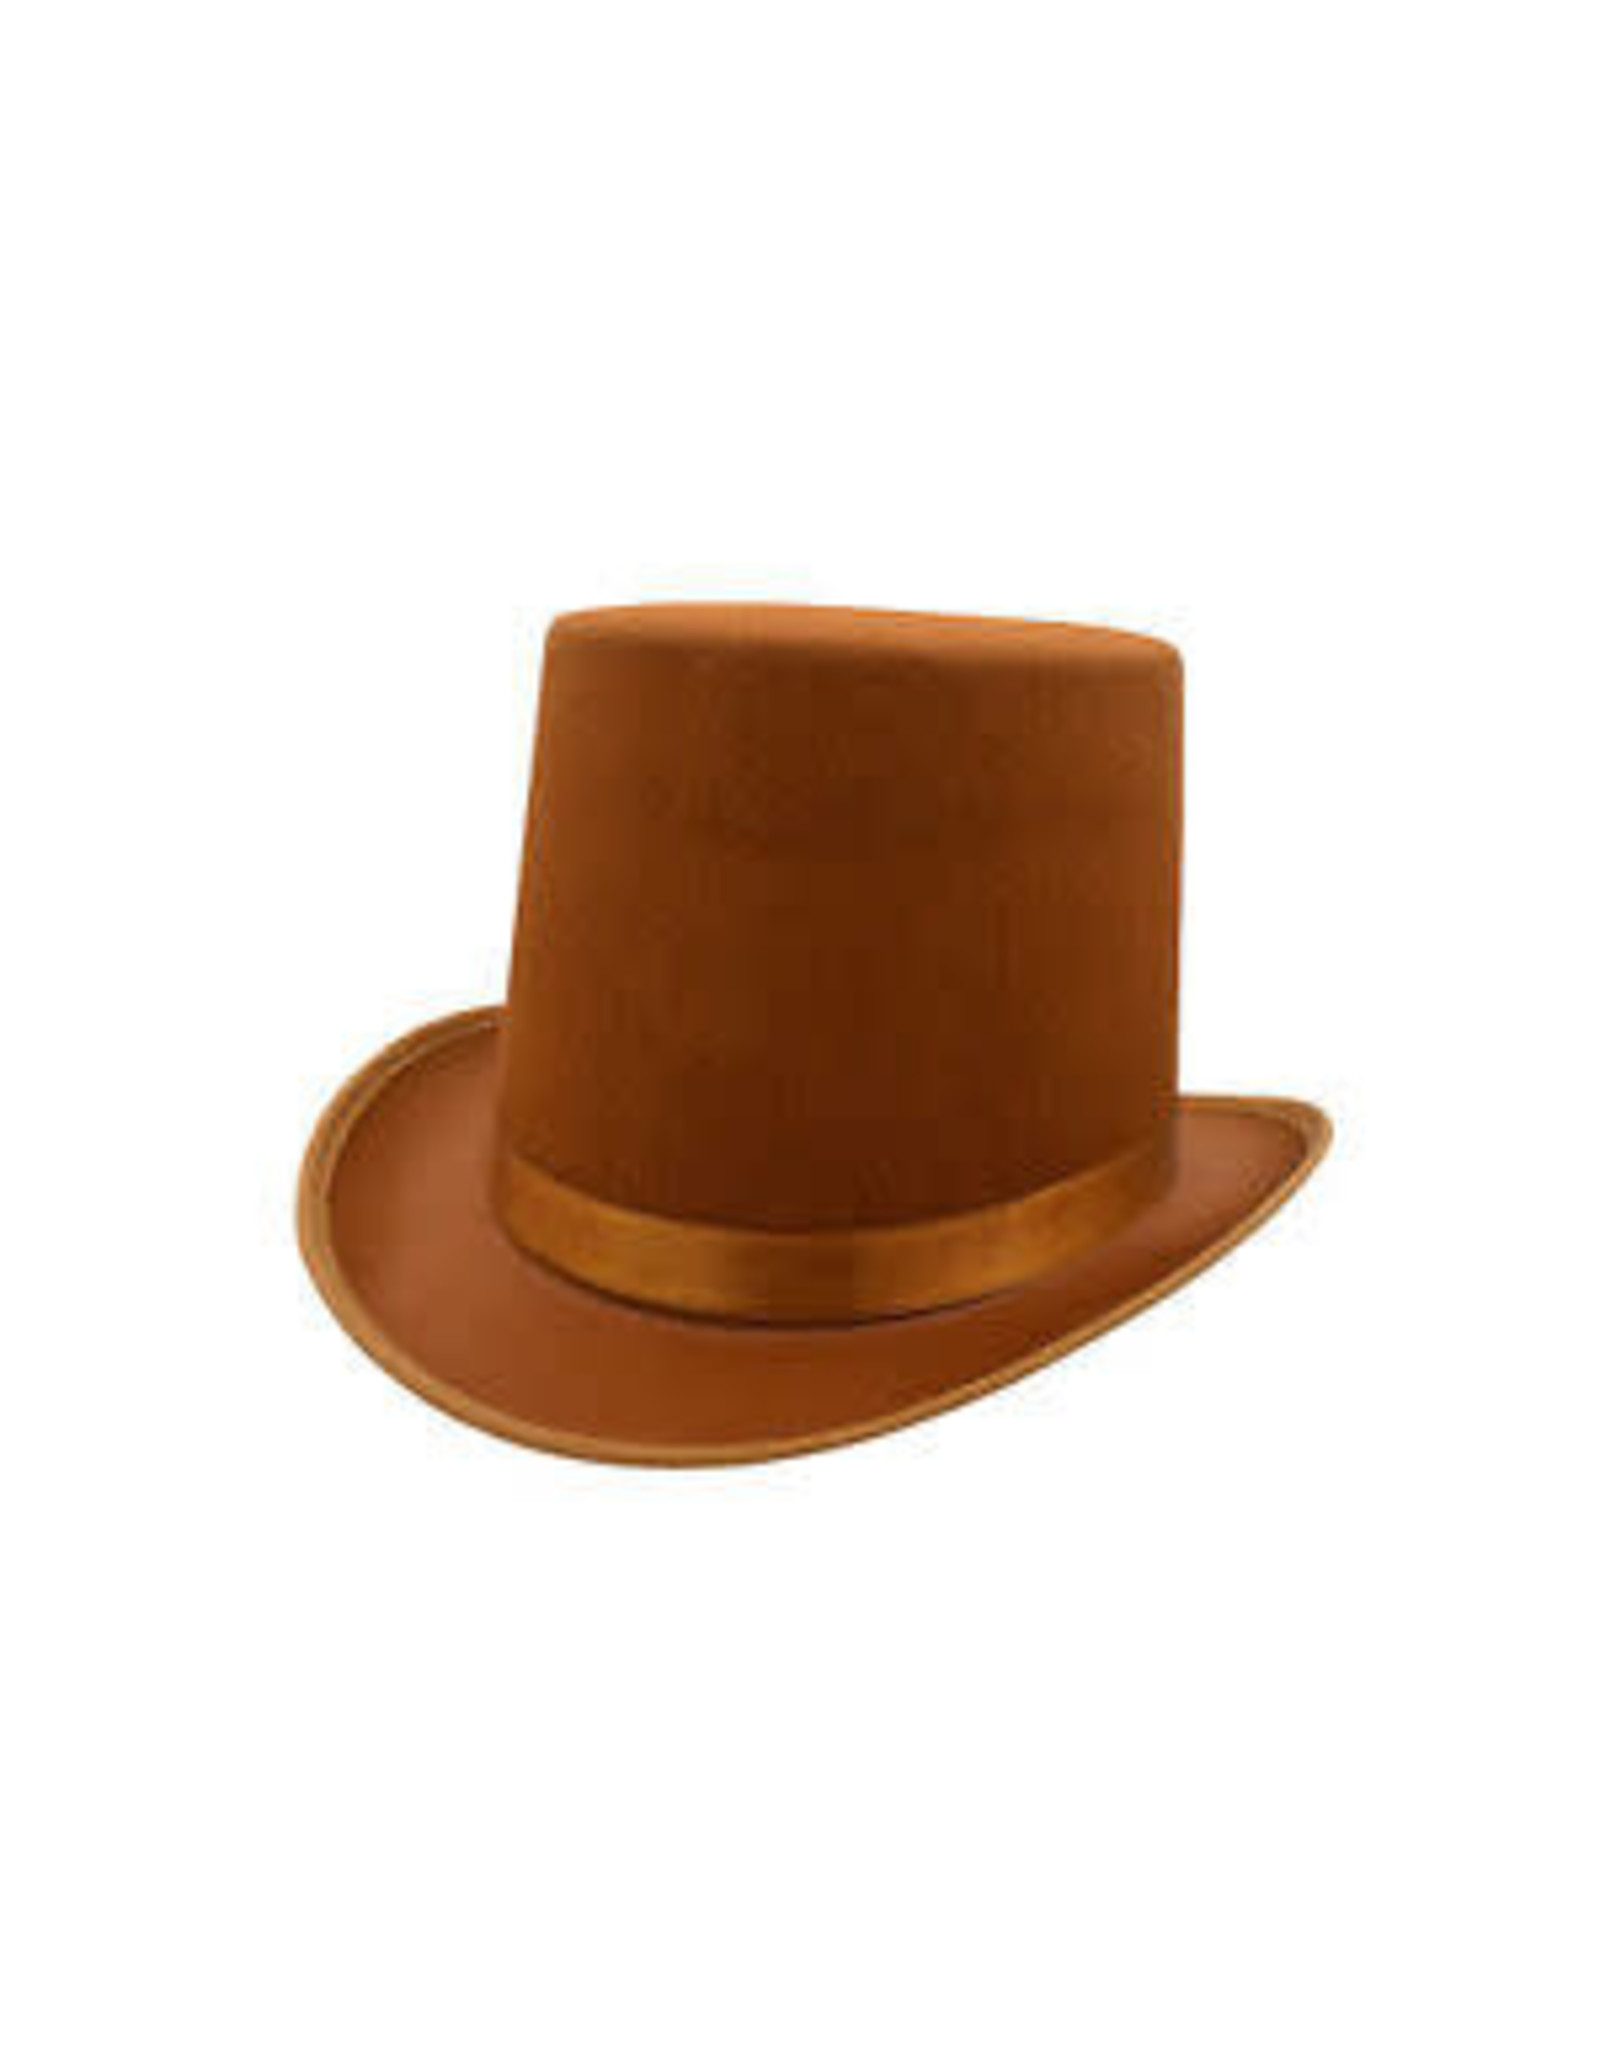 HM Smallwares Brown Satin Top Hat